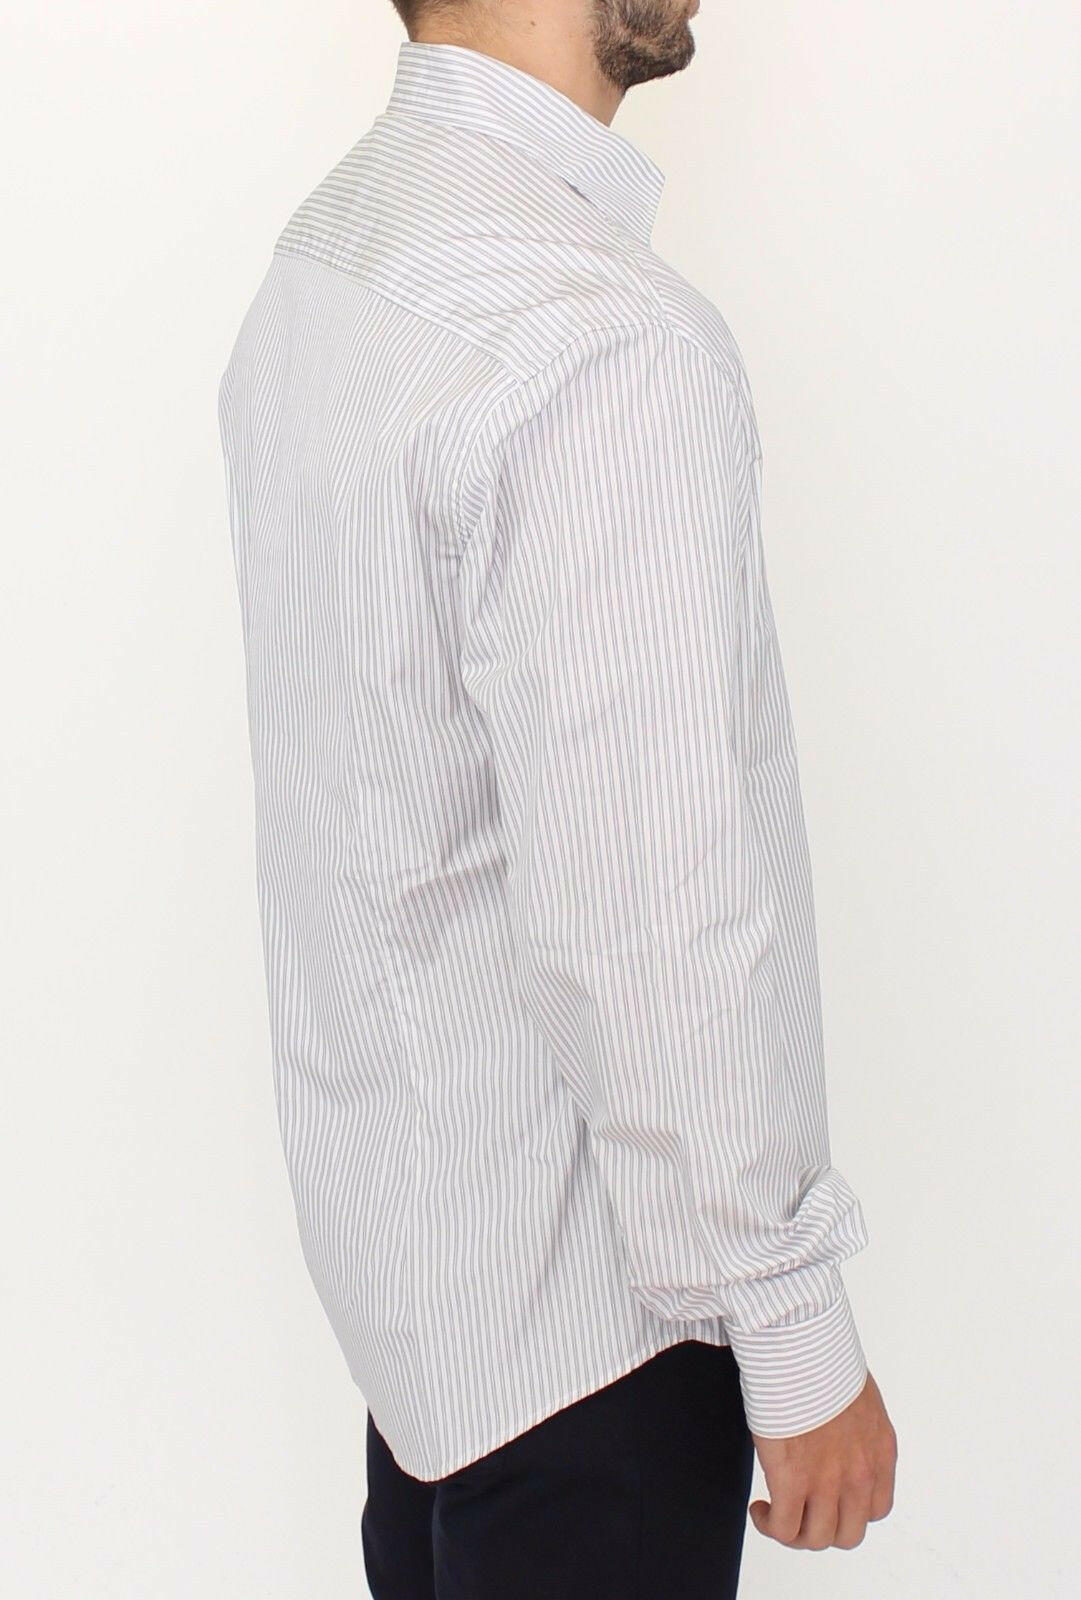 Ermanno Scervino White Gray Striped Regular Fit Casual Shirt - GENUINE AUTHENTIC BRAND LLC  